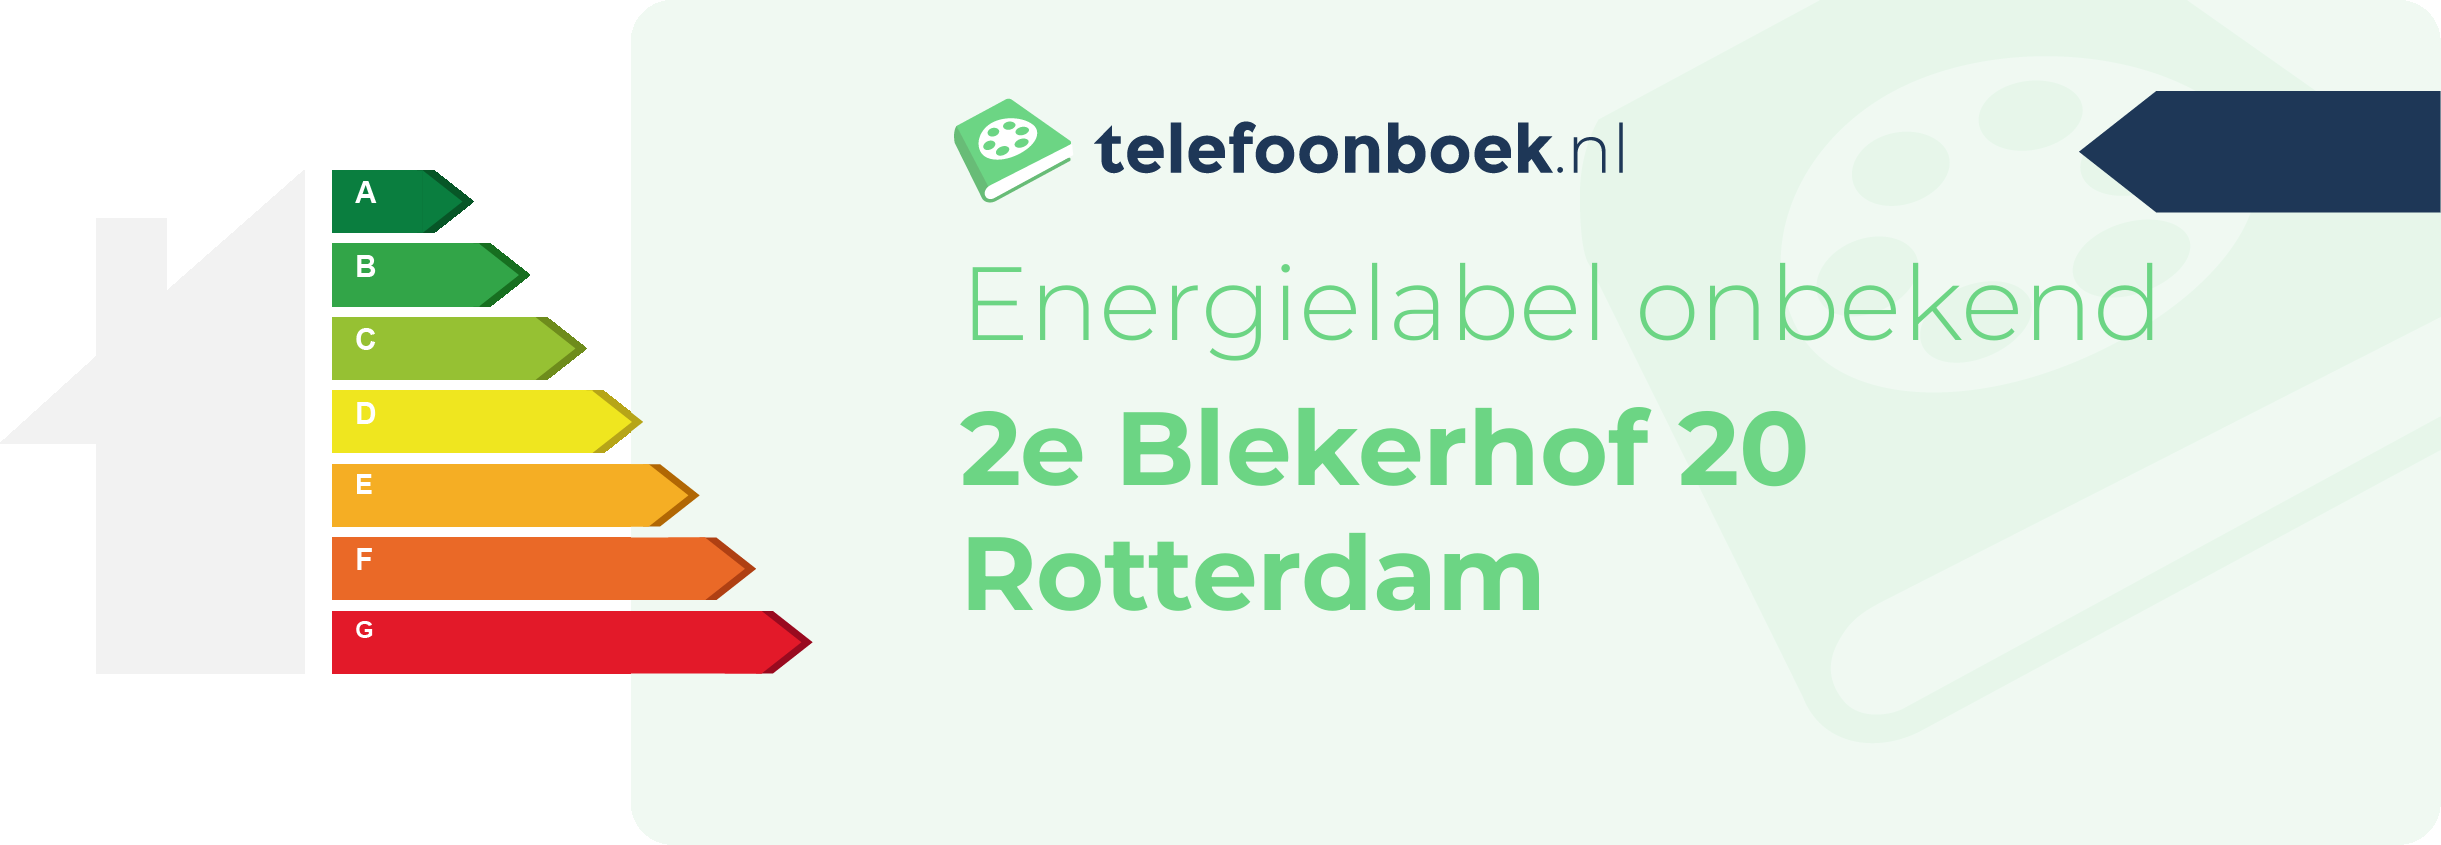 Energielabel 2e Blekerhof 20 Rotterdam